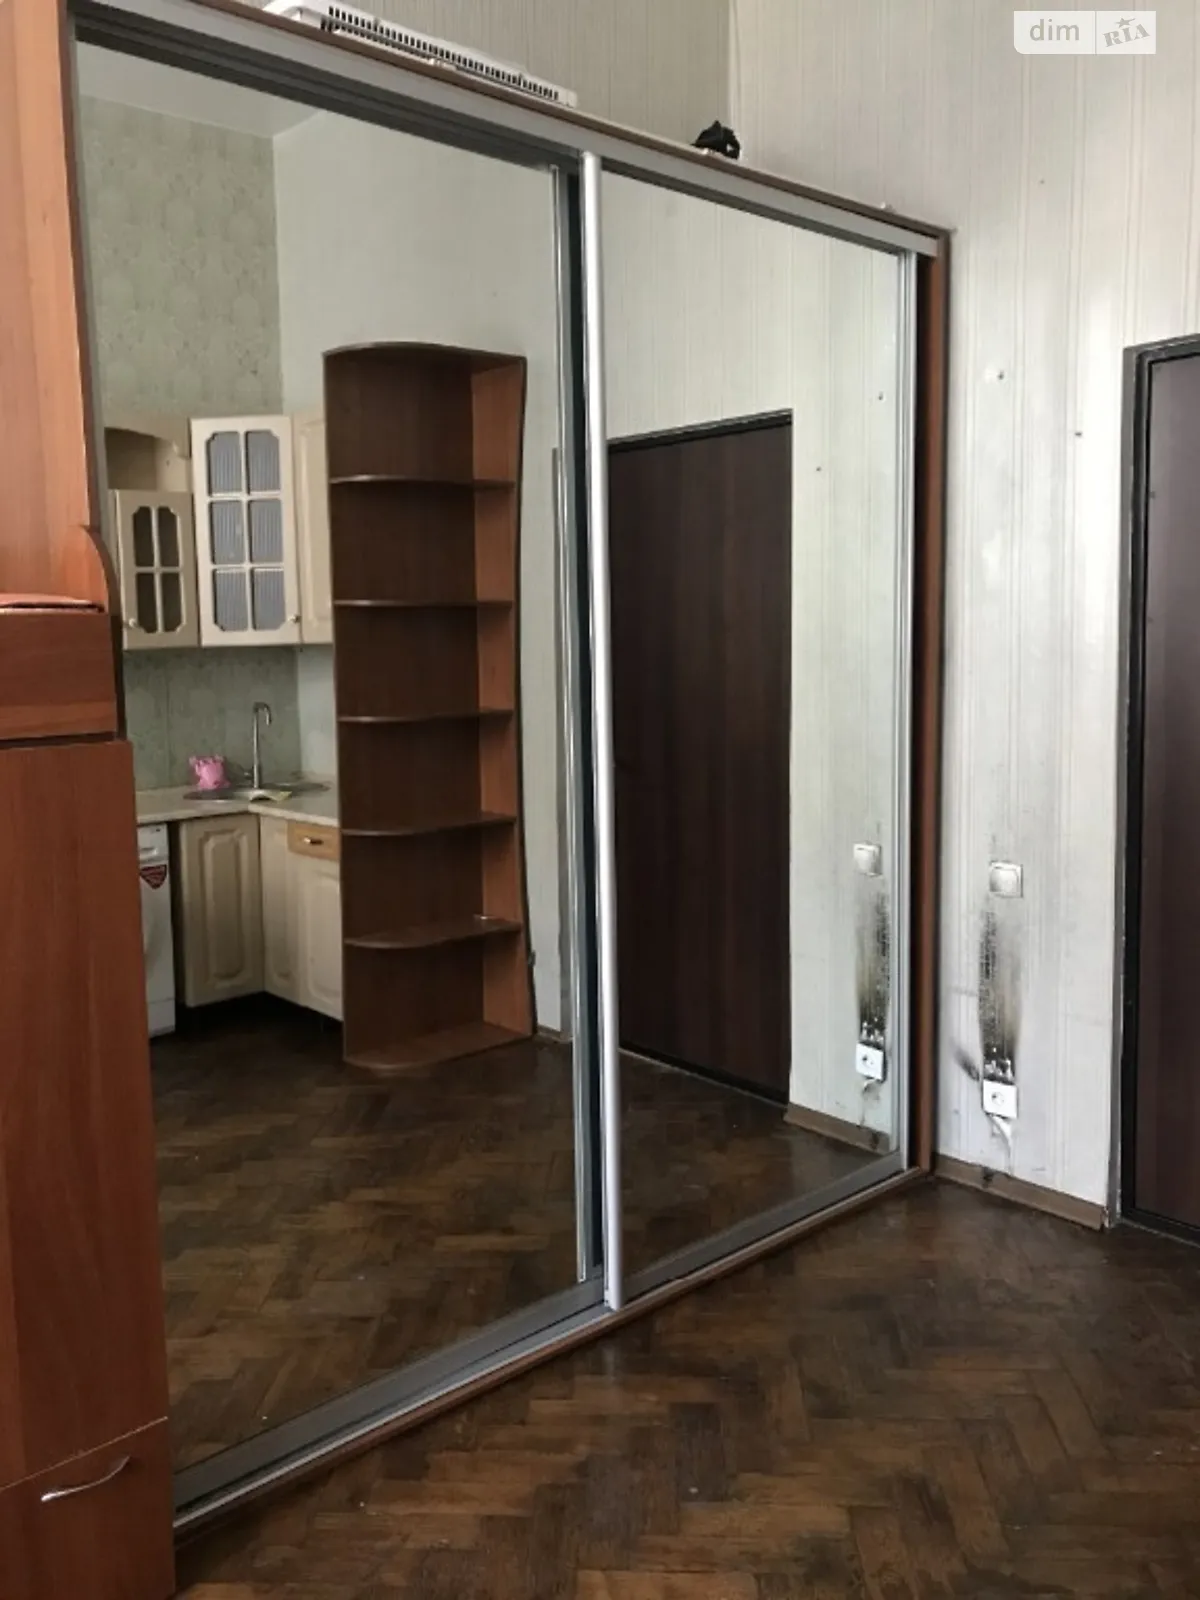 Продается комната 20 кв. м в Одессе, цена: 14500 $ - фото 1